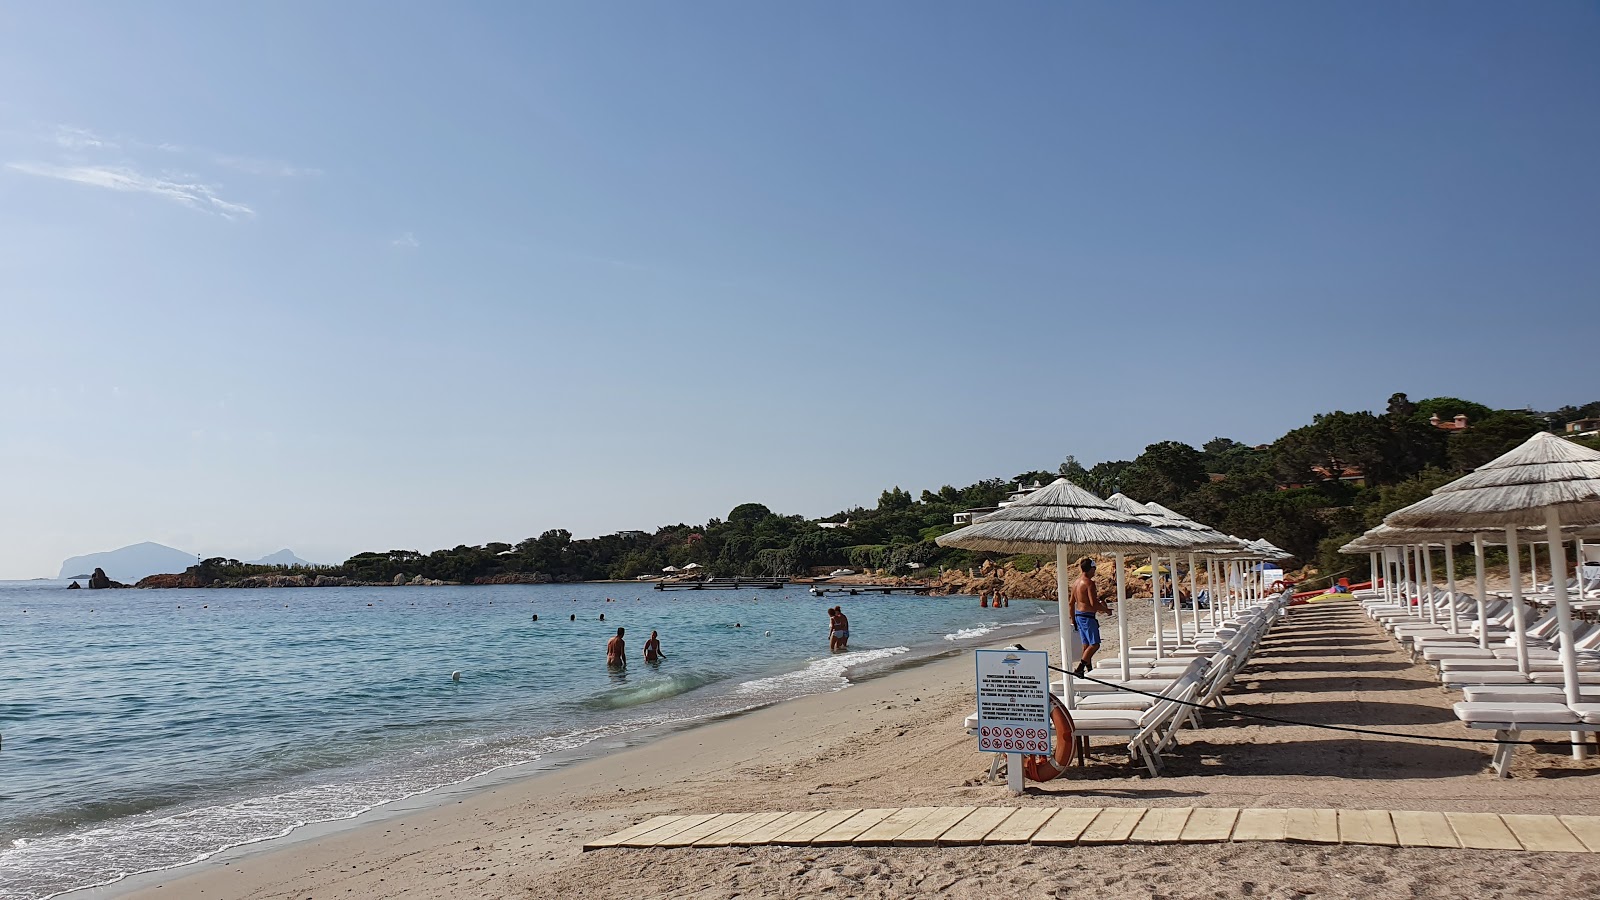 Photo of Spiaggia Del Romazzino with blue pure water surface